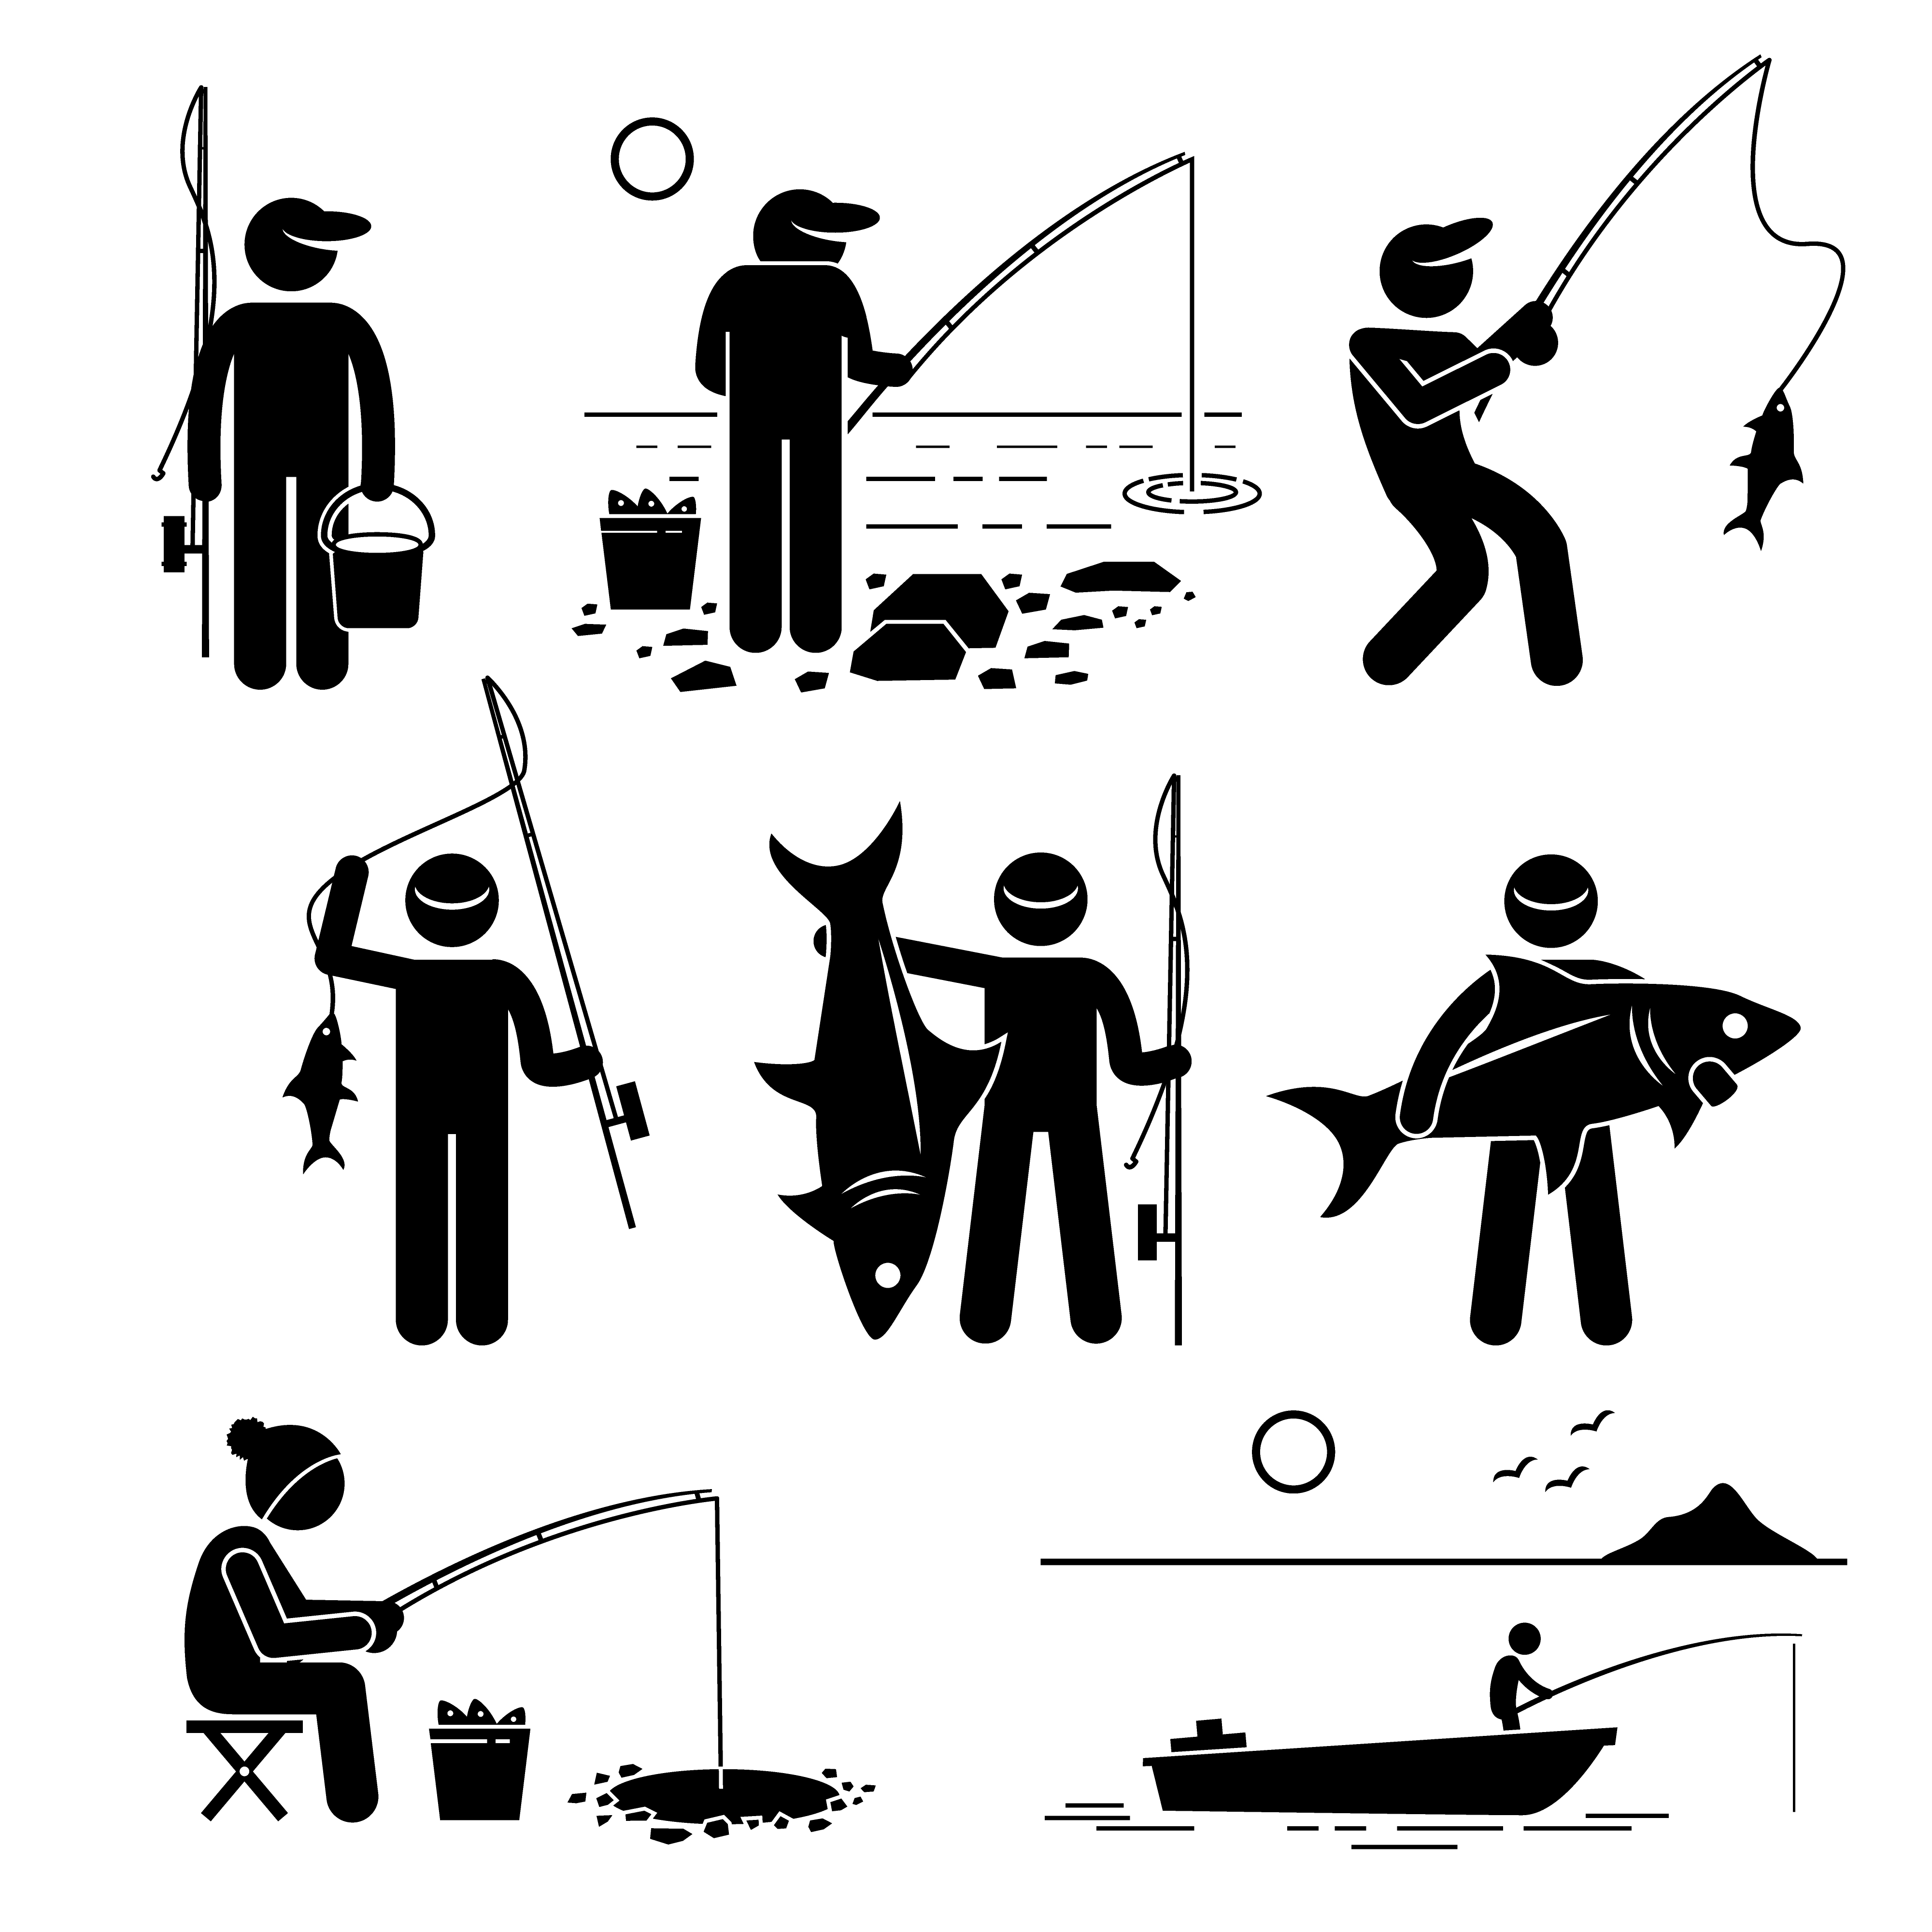 Download Man Ice Fishing Free Vector Art - (11 Free Downloads)